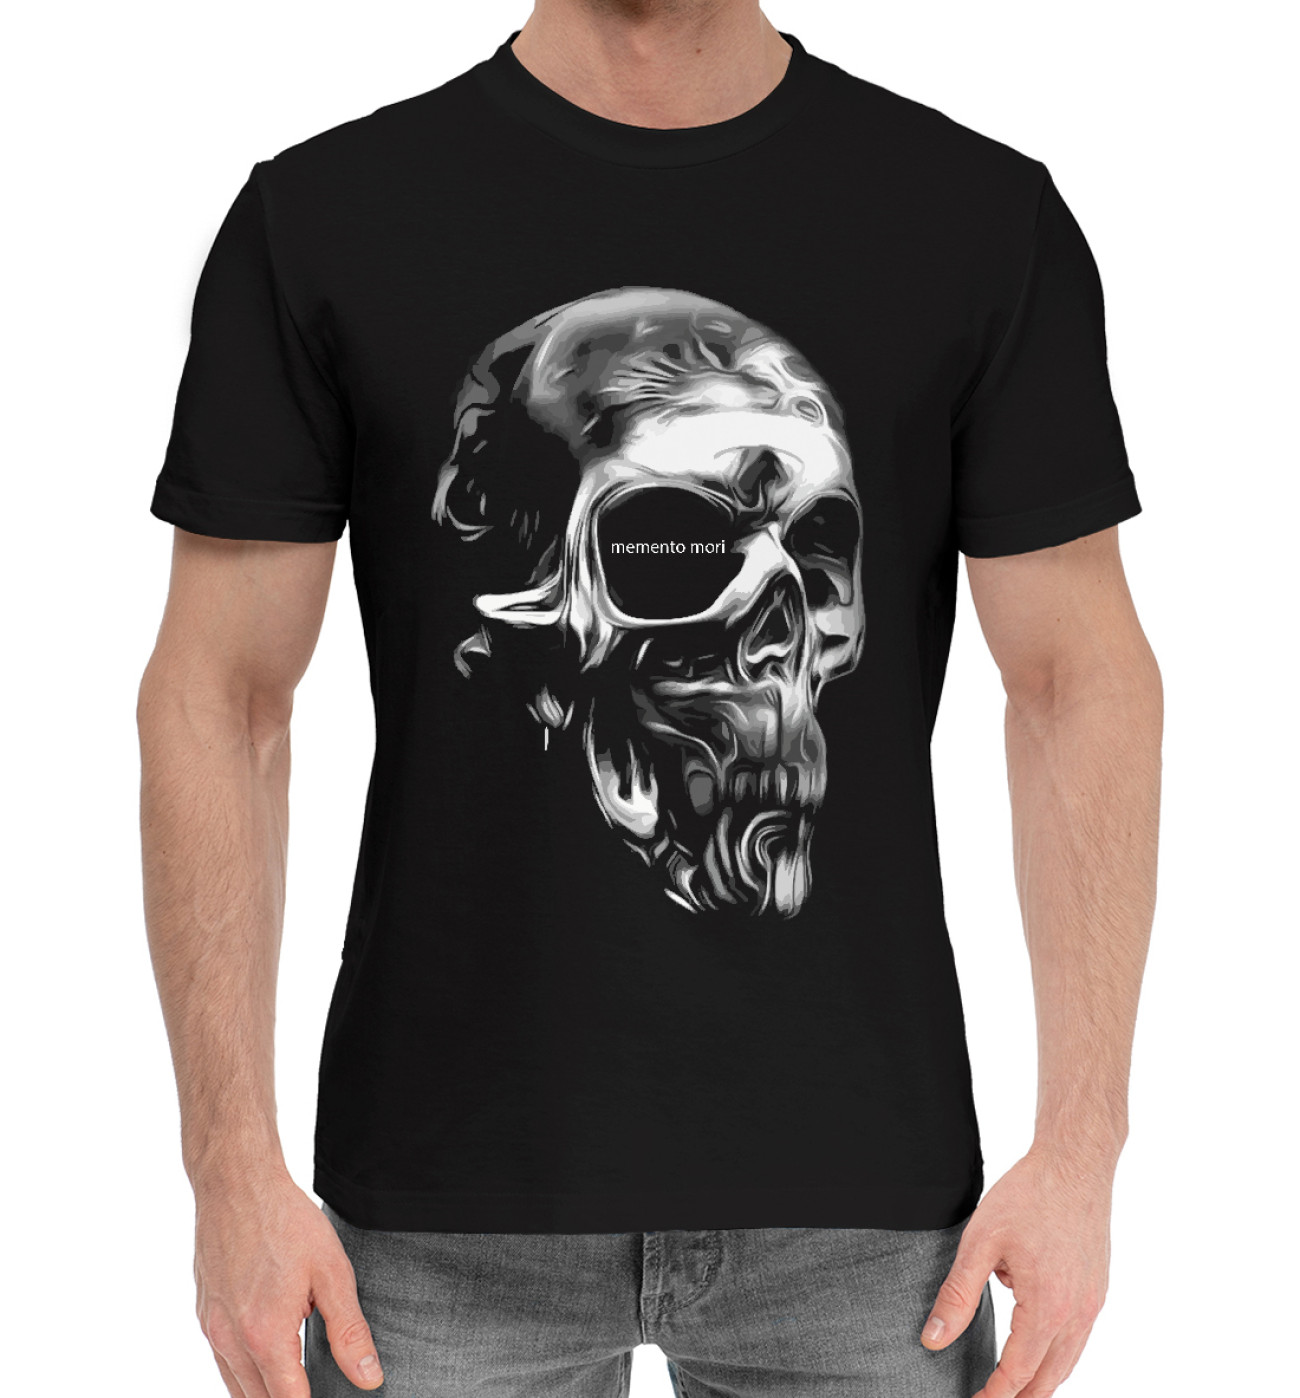 Мужская Хлопковая футболка Memento mori, артикул: SKU-909524-hfu-2